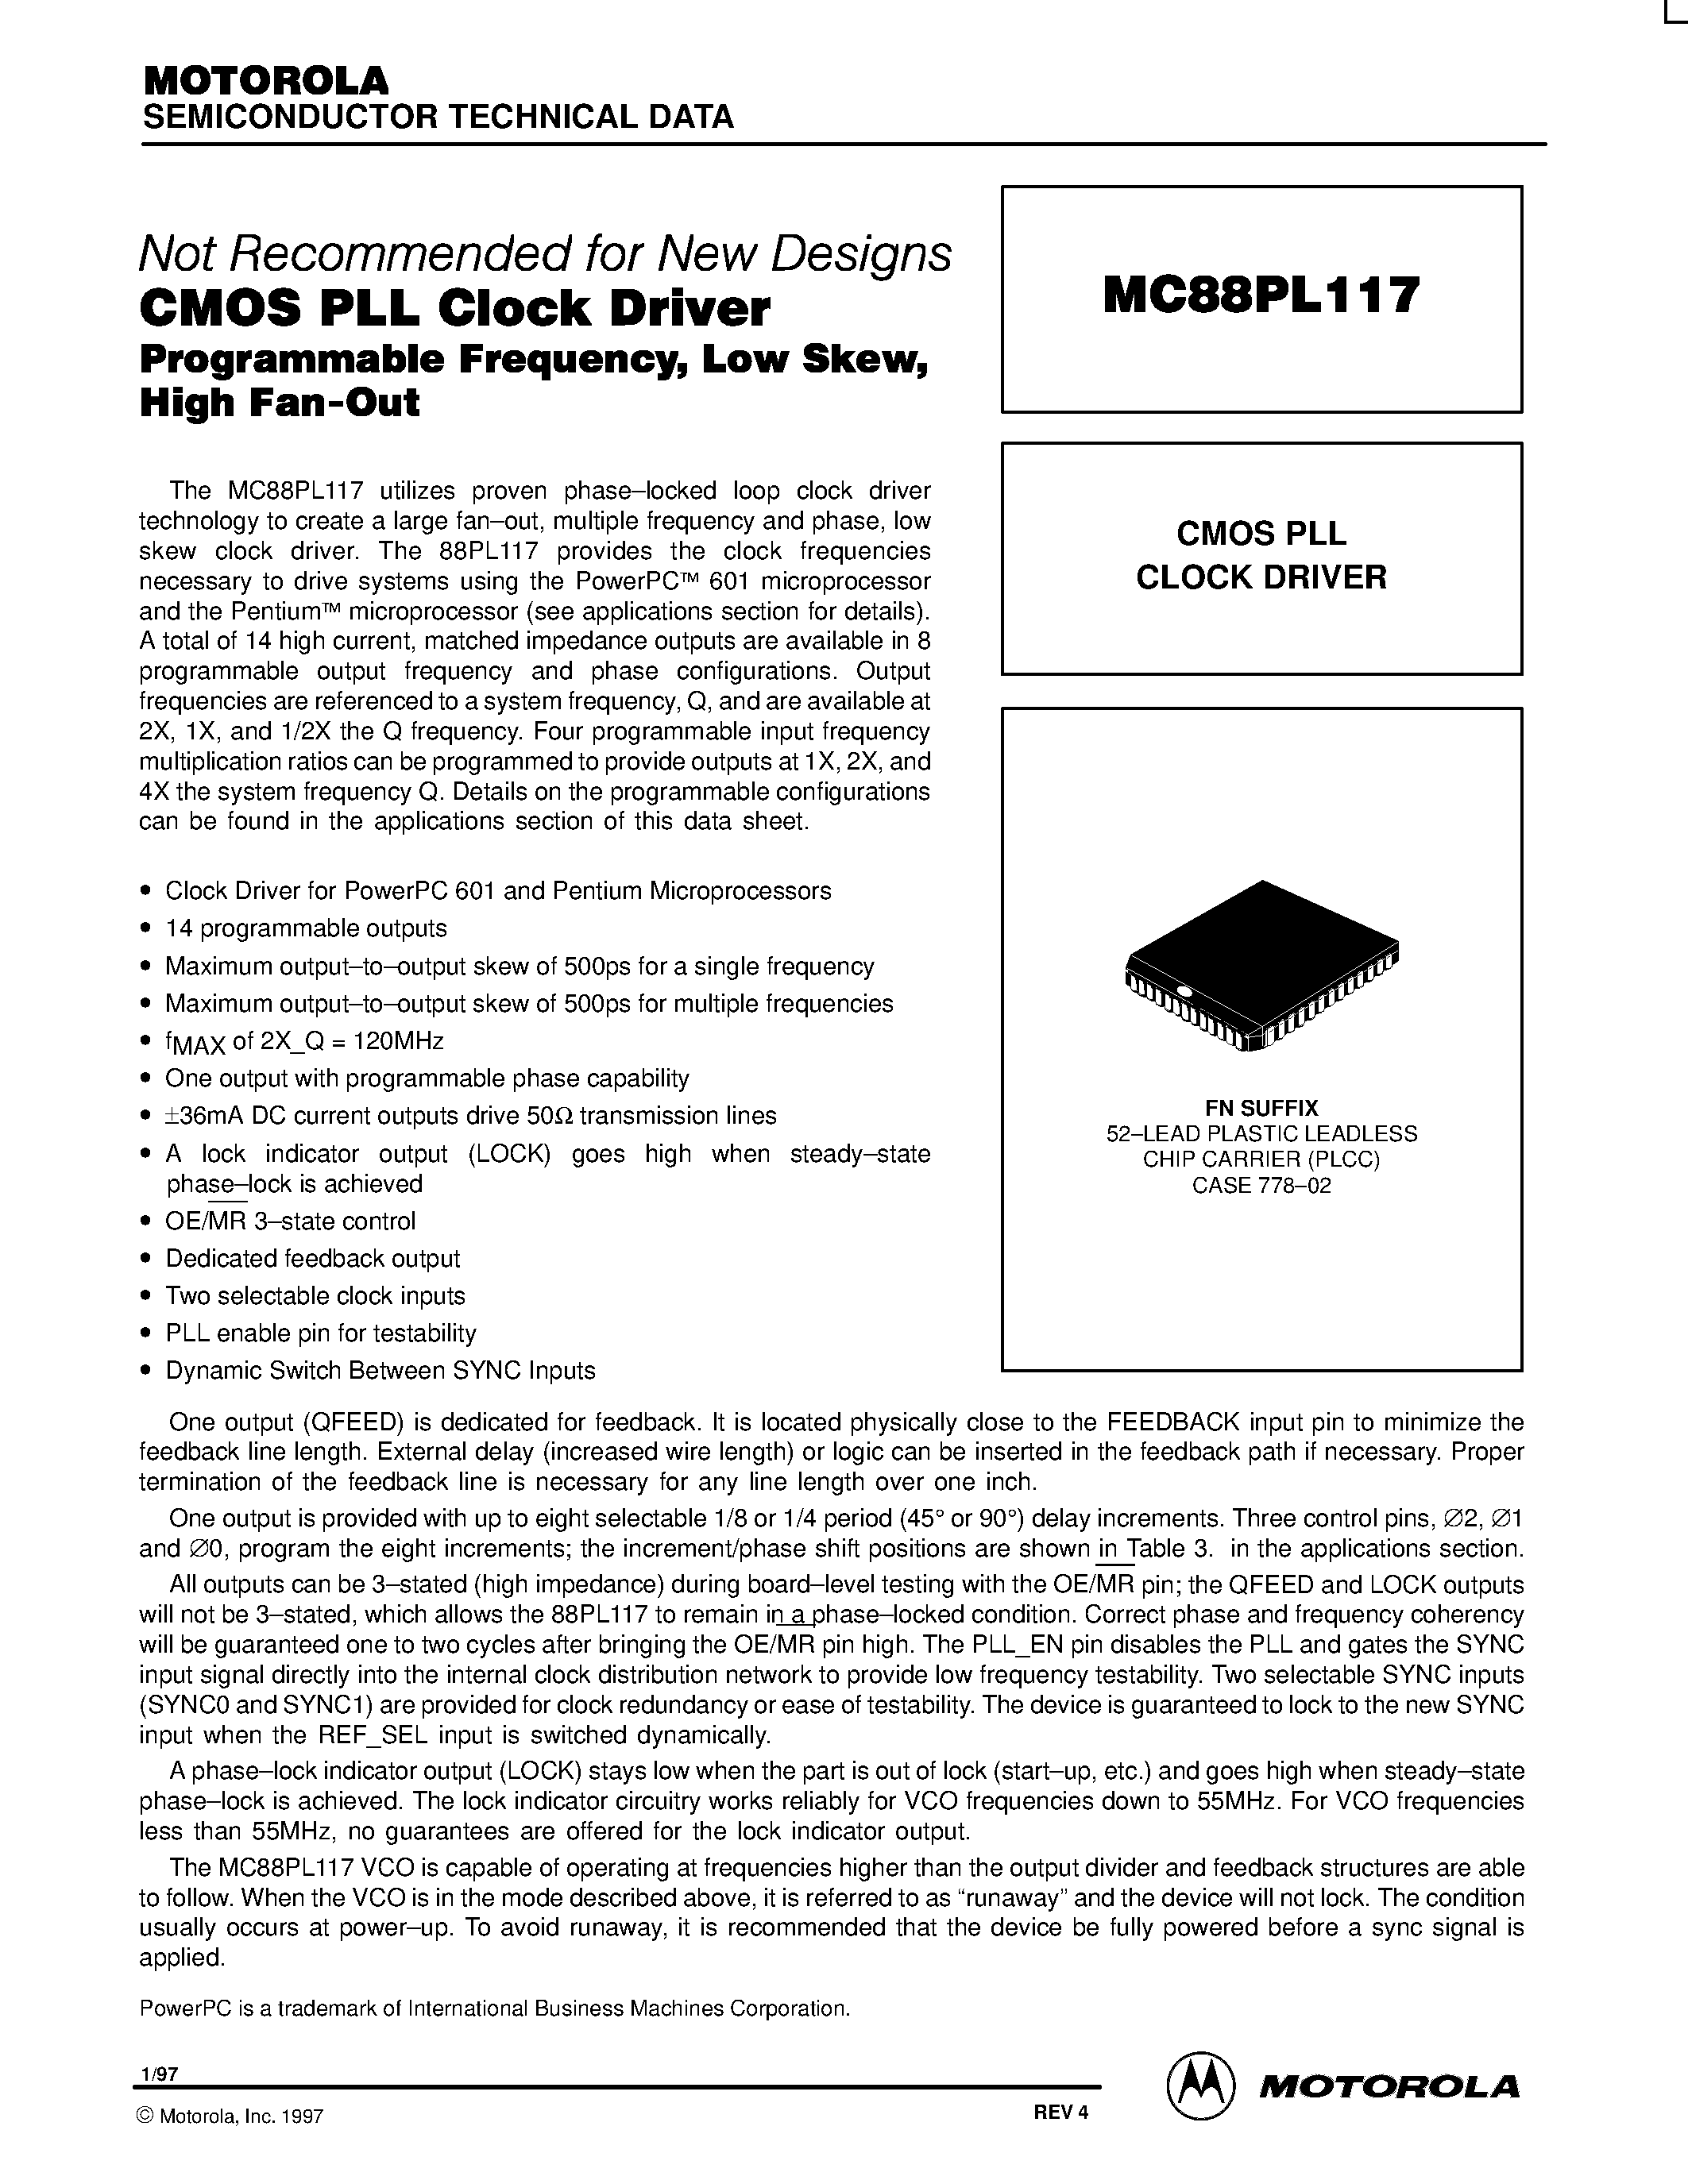 Datasheet MC88PL117 - CMOS PLL CLOCK DRIVER page 1